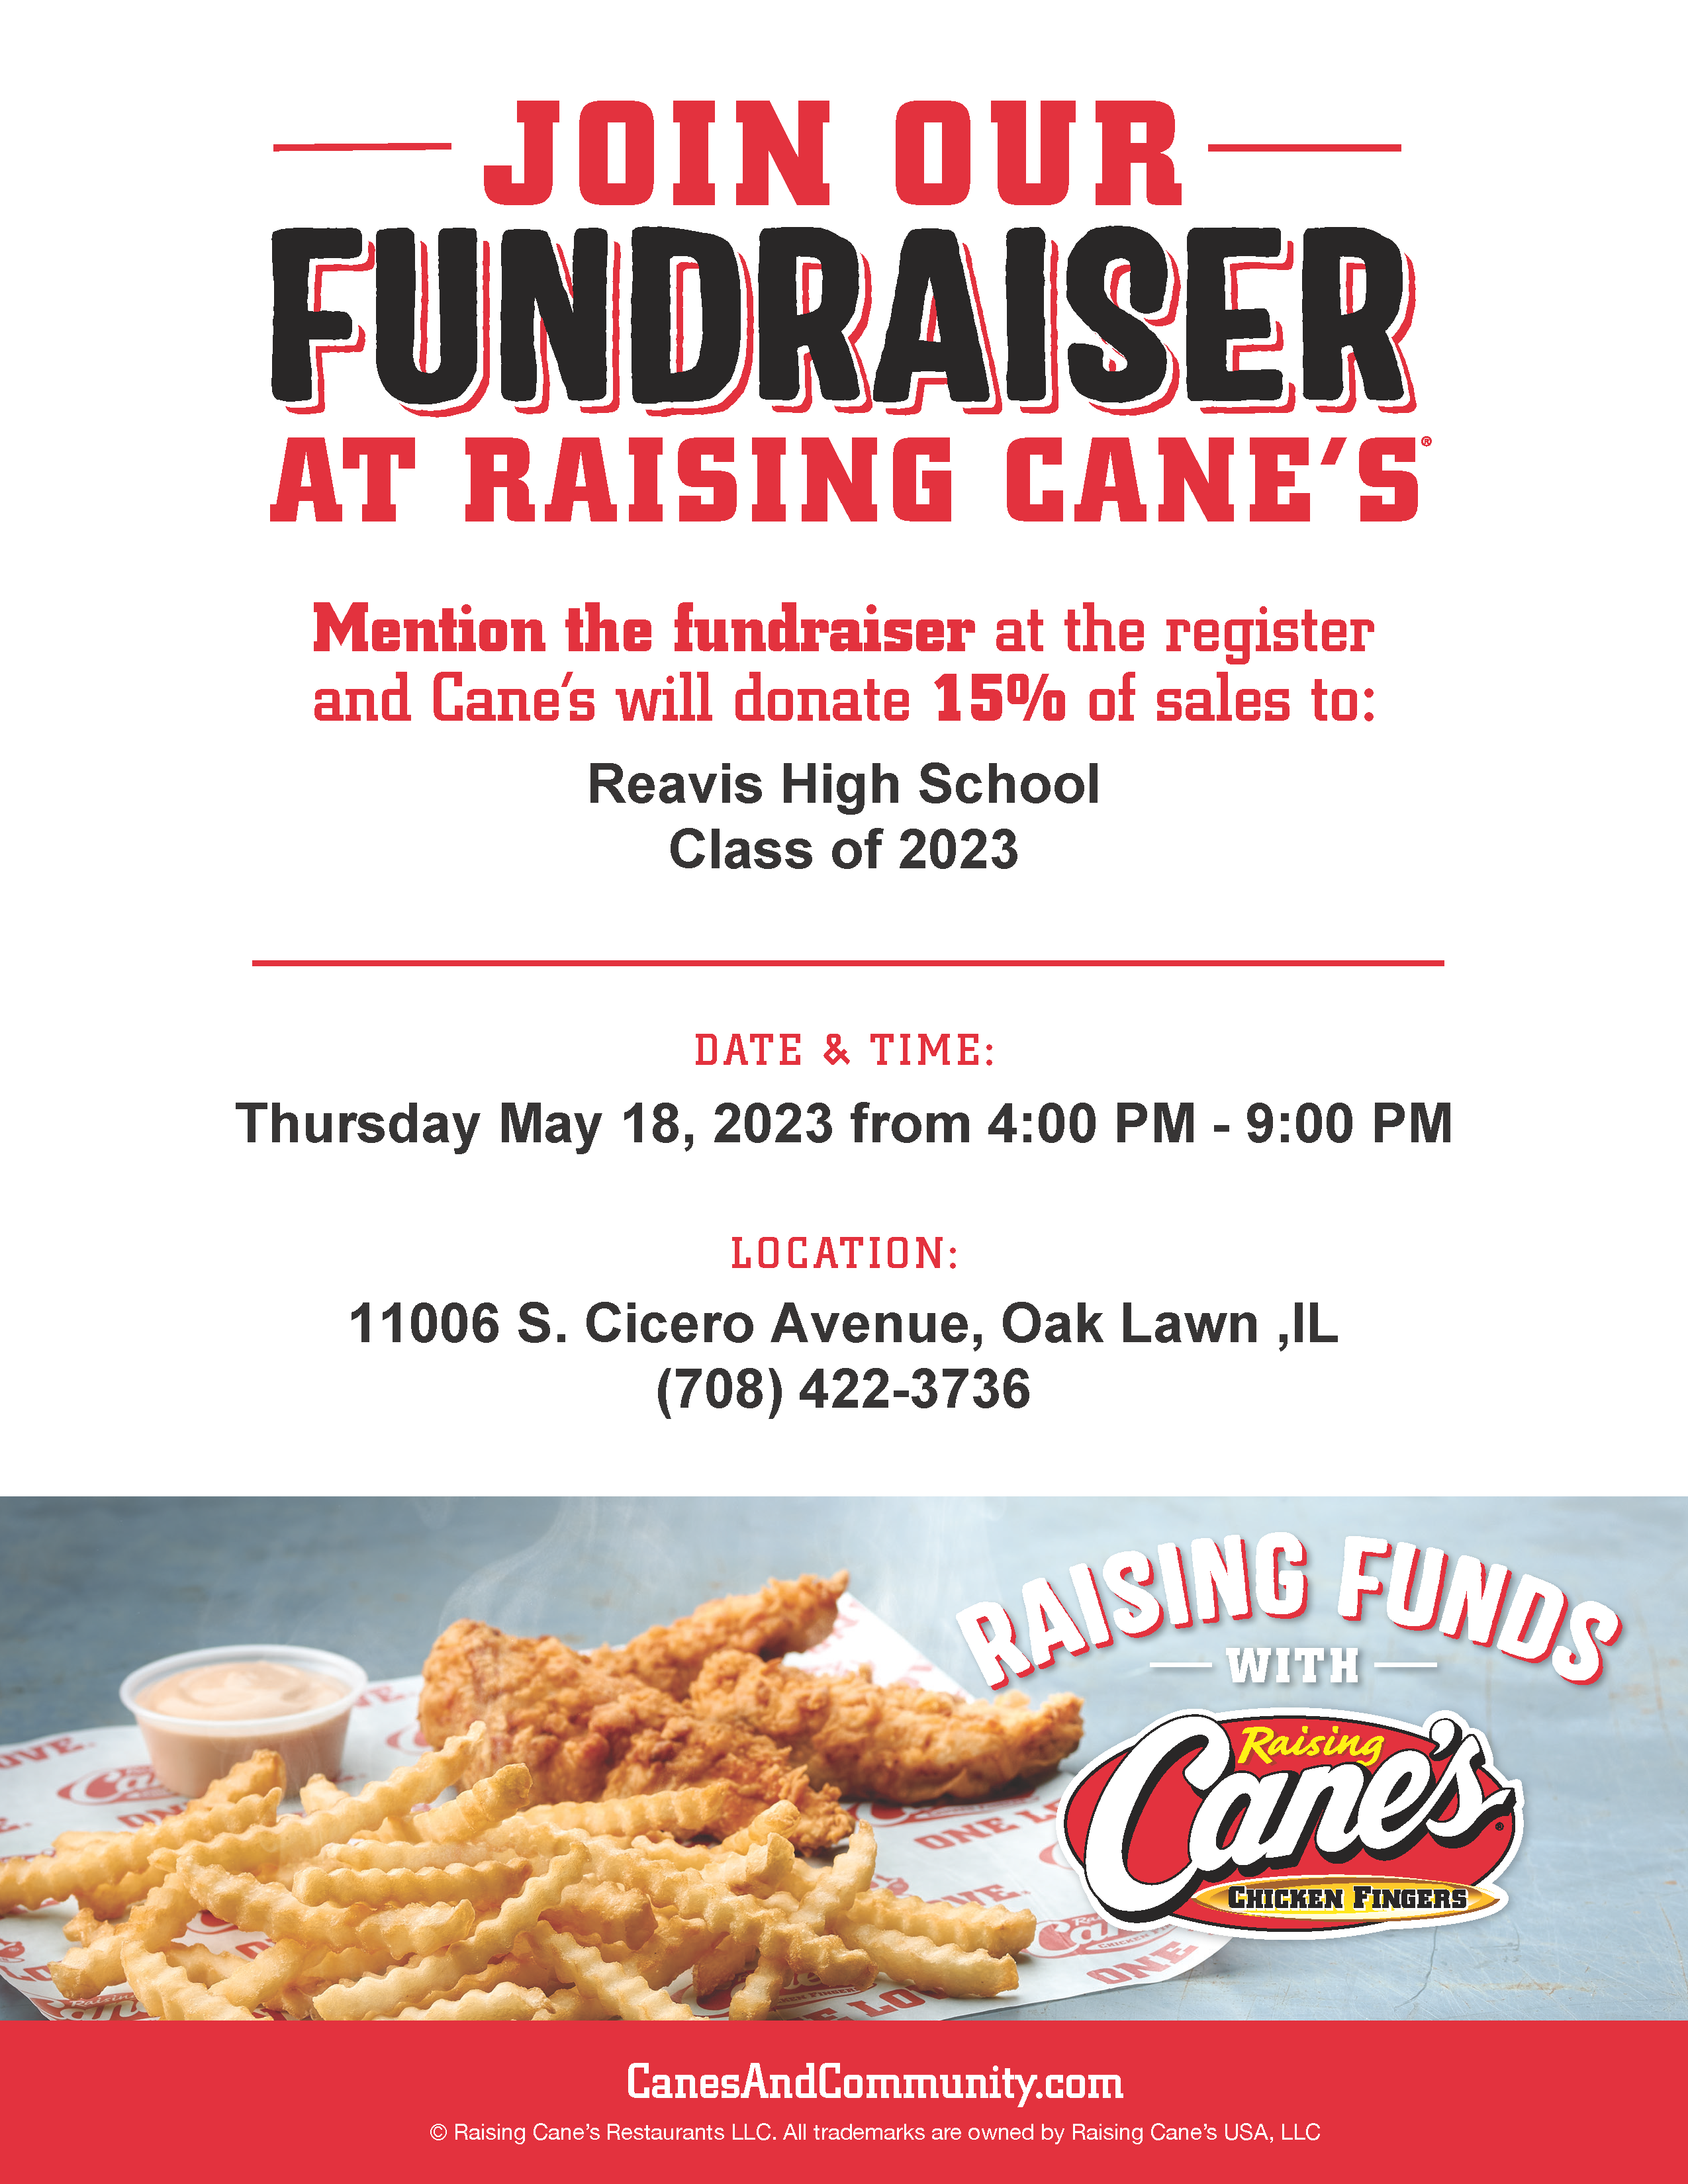 Fundraiser at Raising Cane's